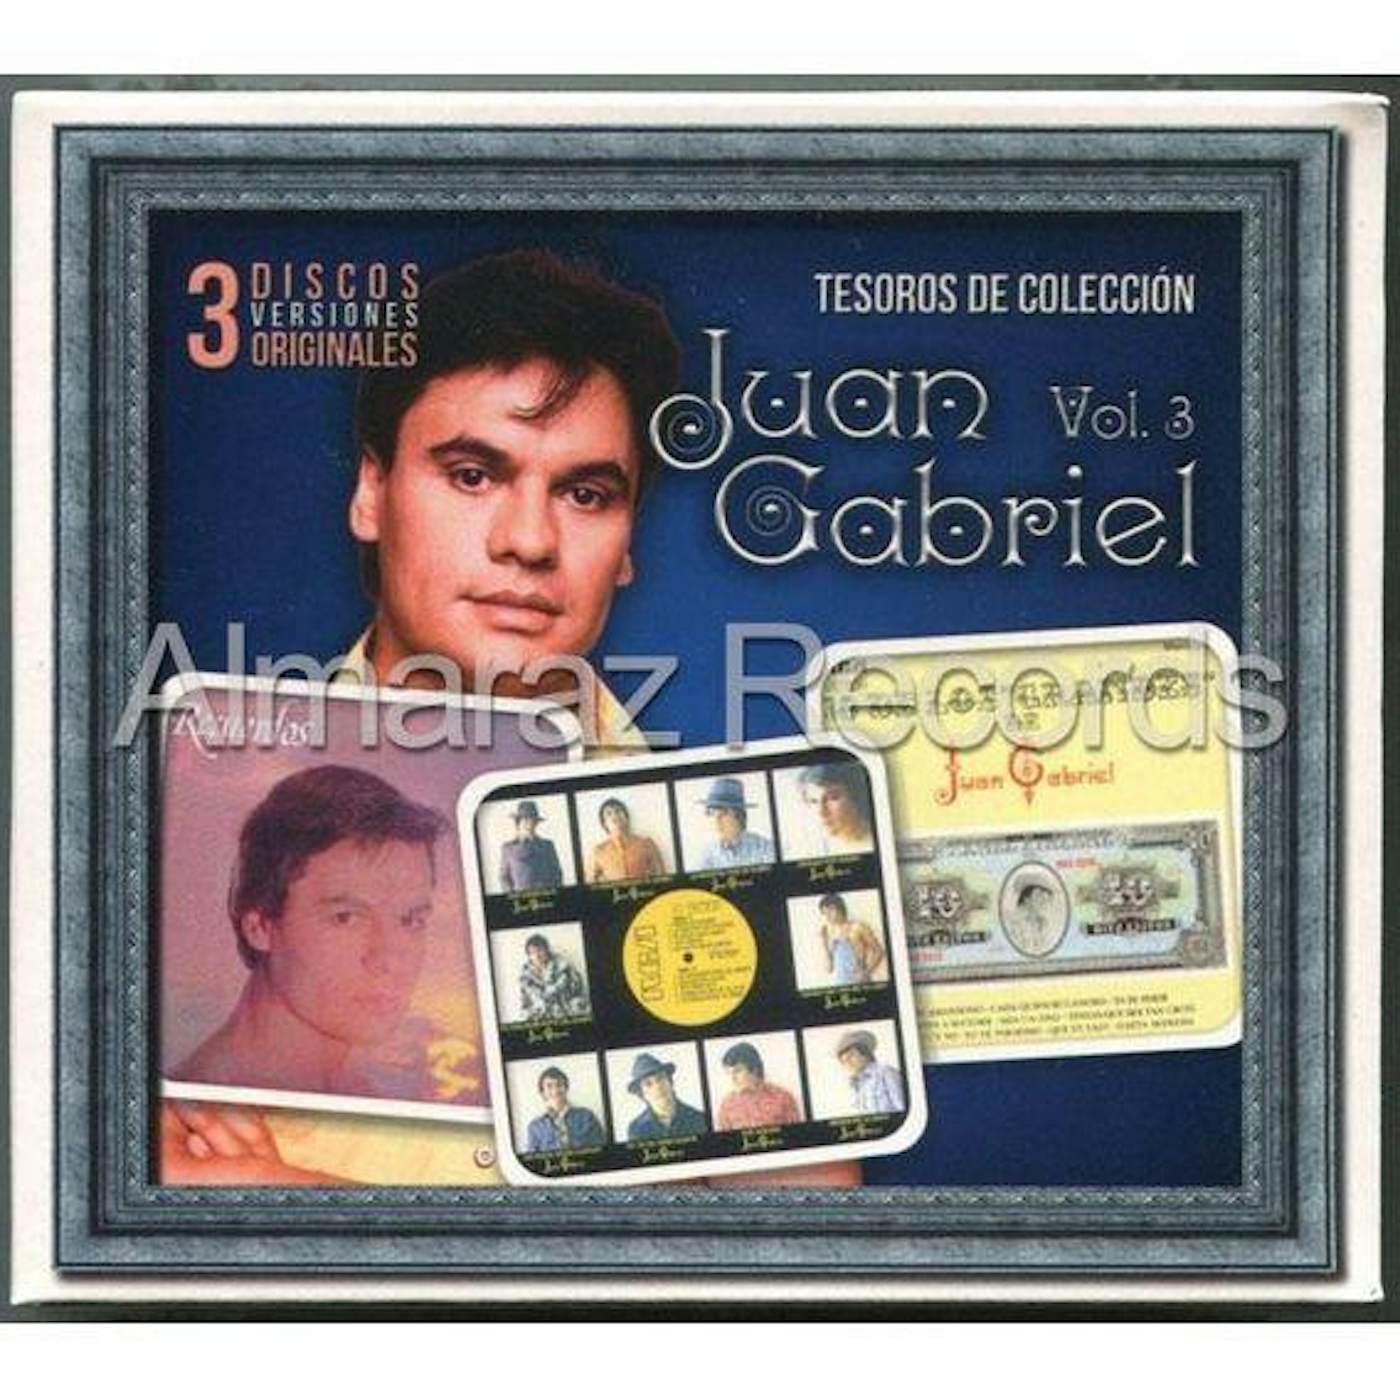 Juan Gabriel TESOROS DE COLECCION VOLUME 3 CD